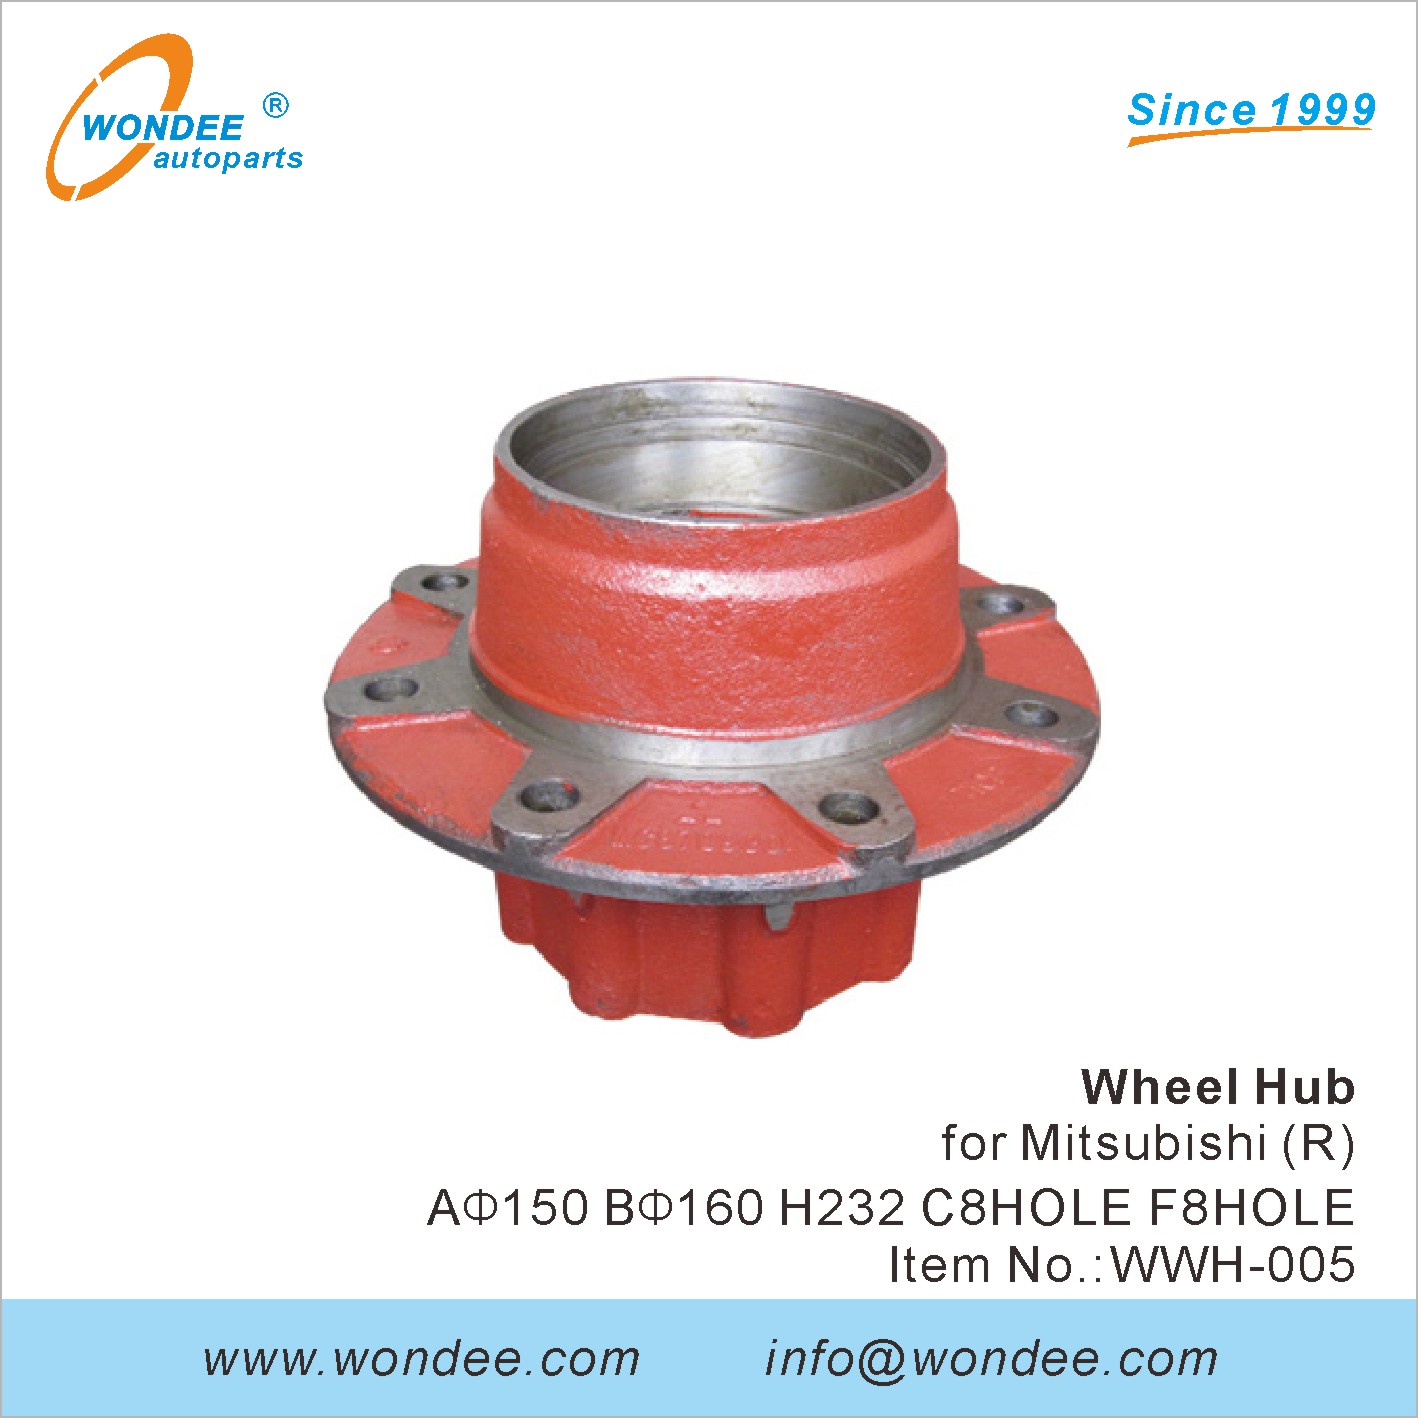 WONDEE wheel hub (5)